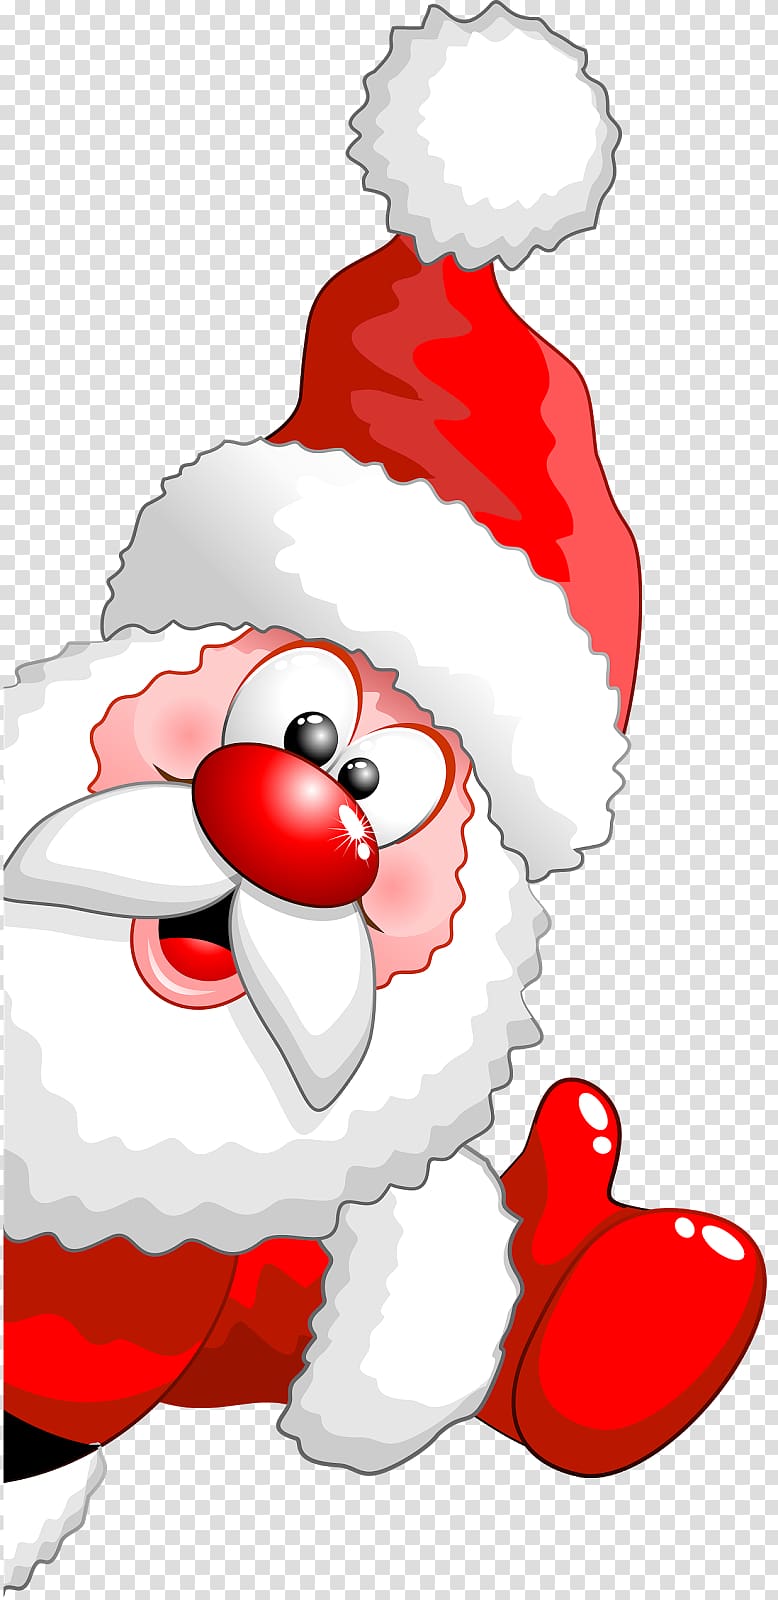 Santa Claus Reindeer Christmas and holiday season Christmas tree, santa sleigh transparent background PNG clipart